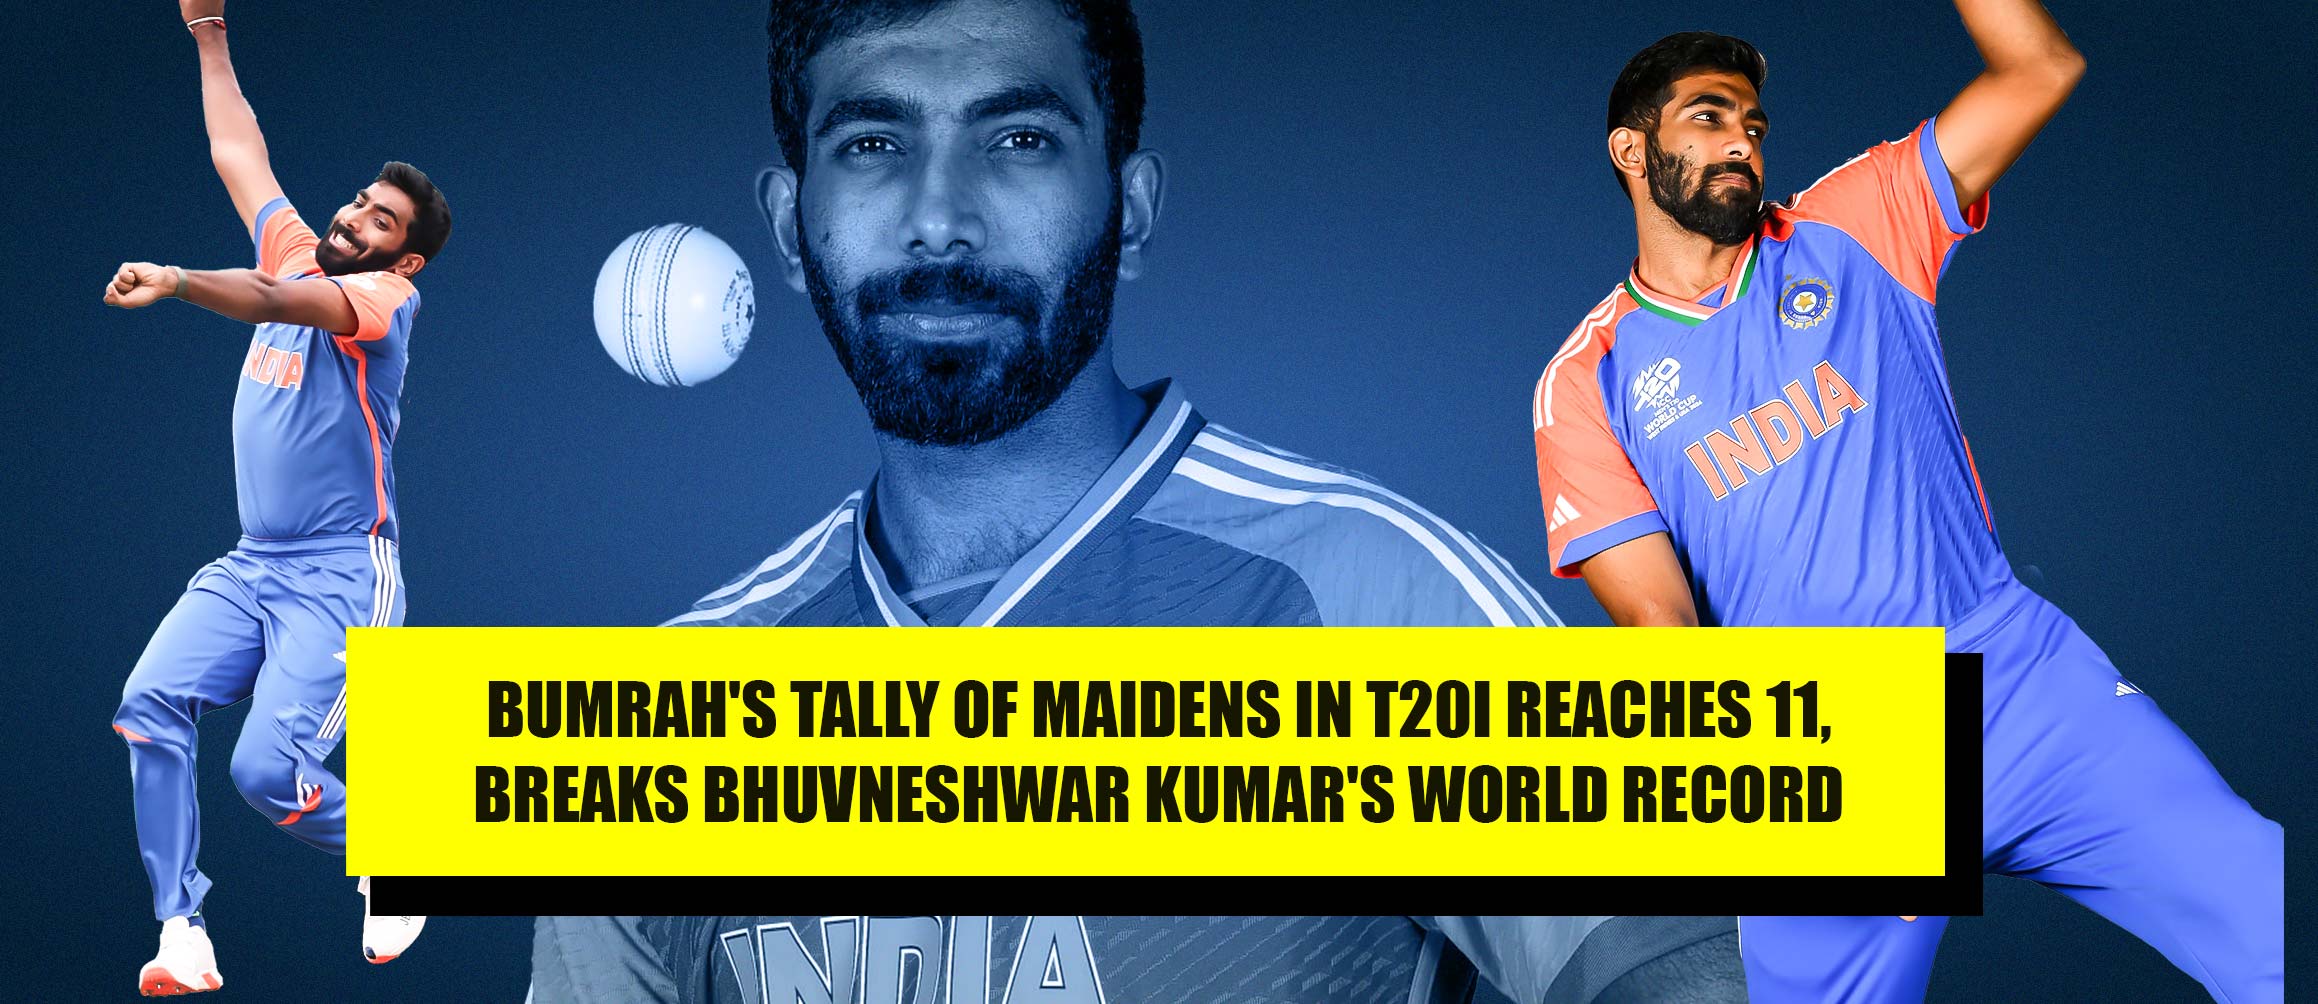 Bumrah’s Tally of Maidens in T20I Reaches 11, Breaks Bhuvneshwar Kumar’s Record